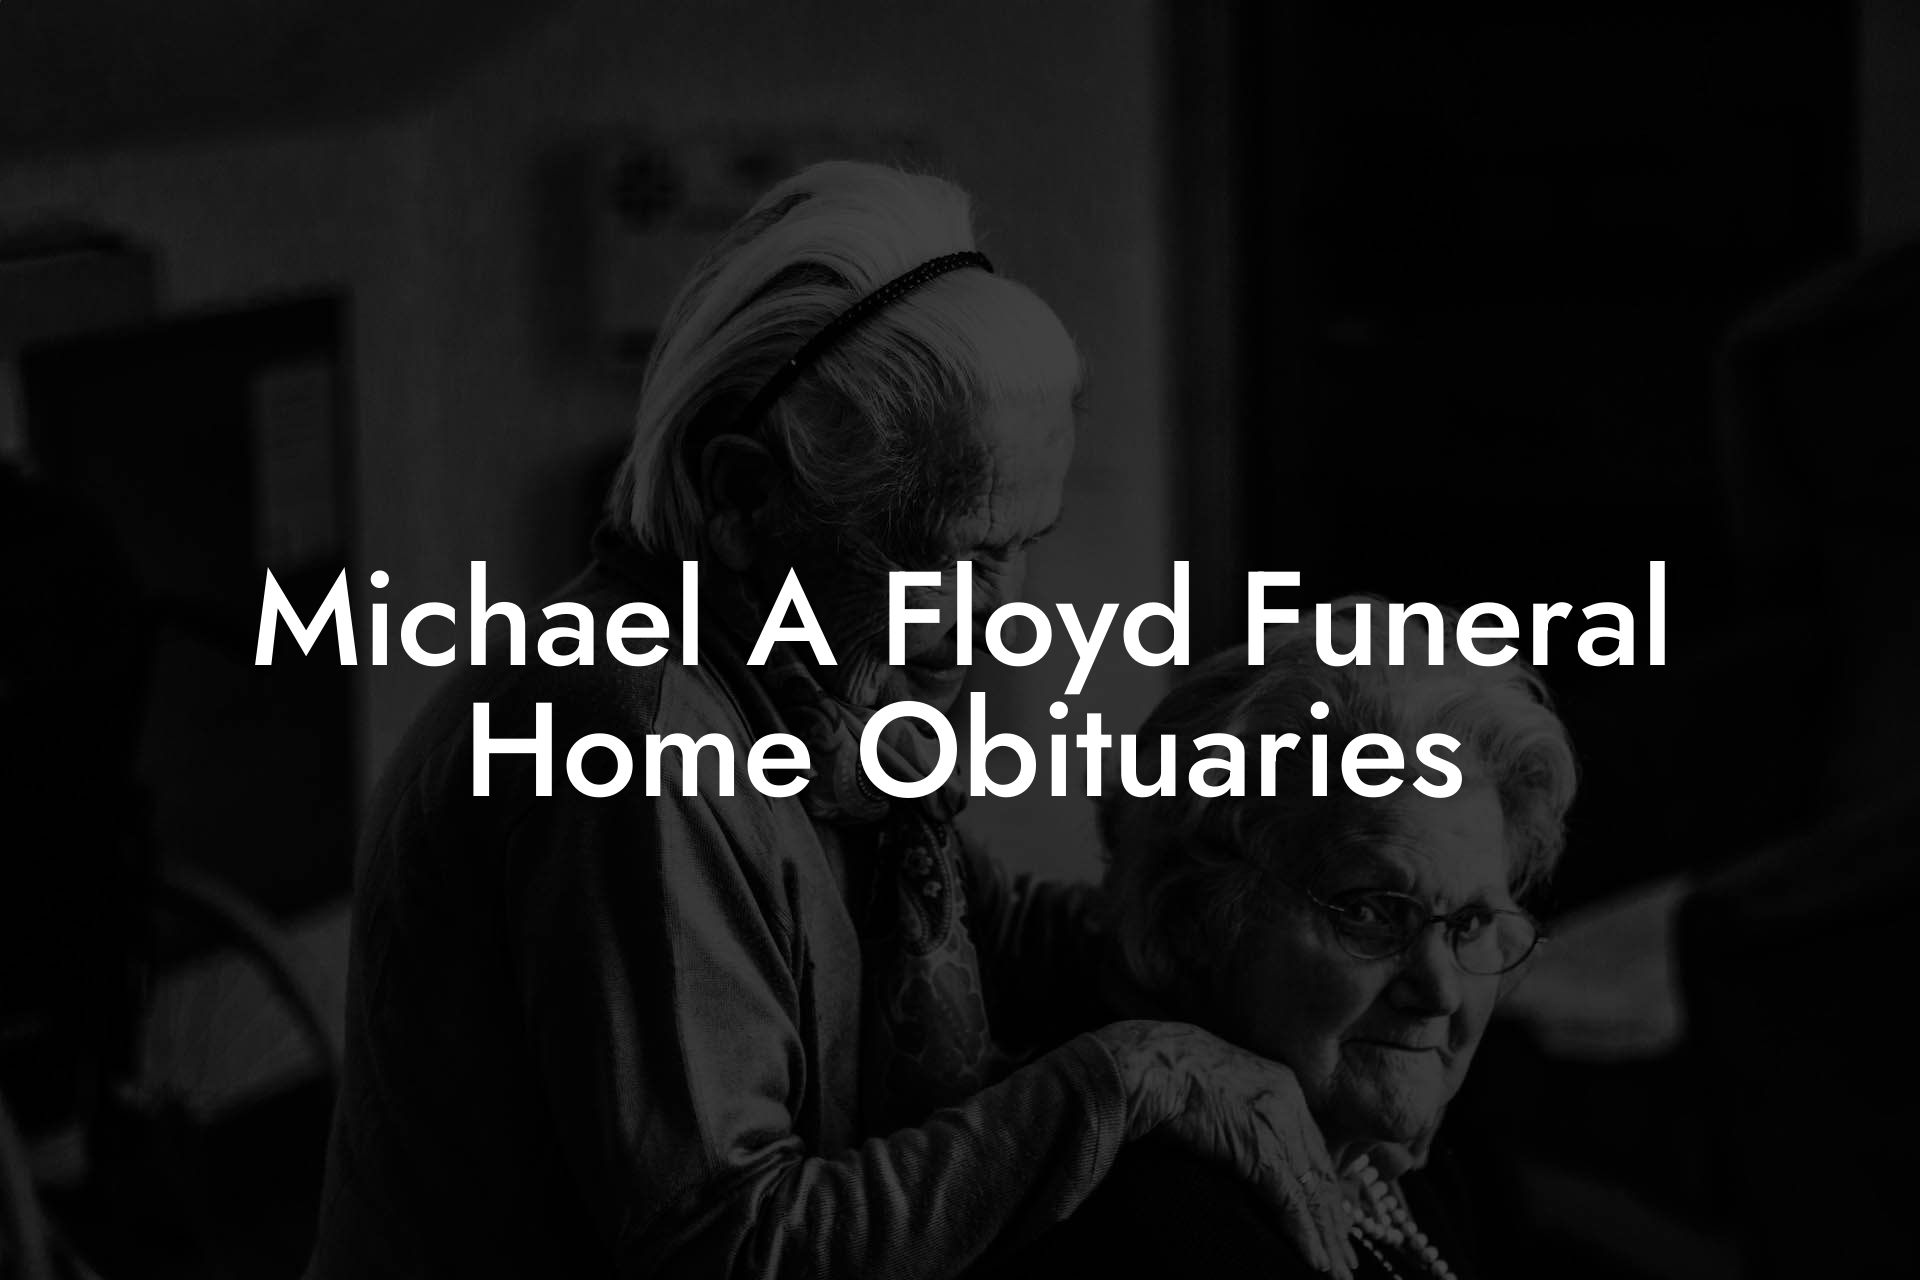 Michael A Floyd Funeral Home Obituaries